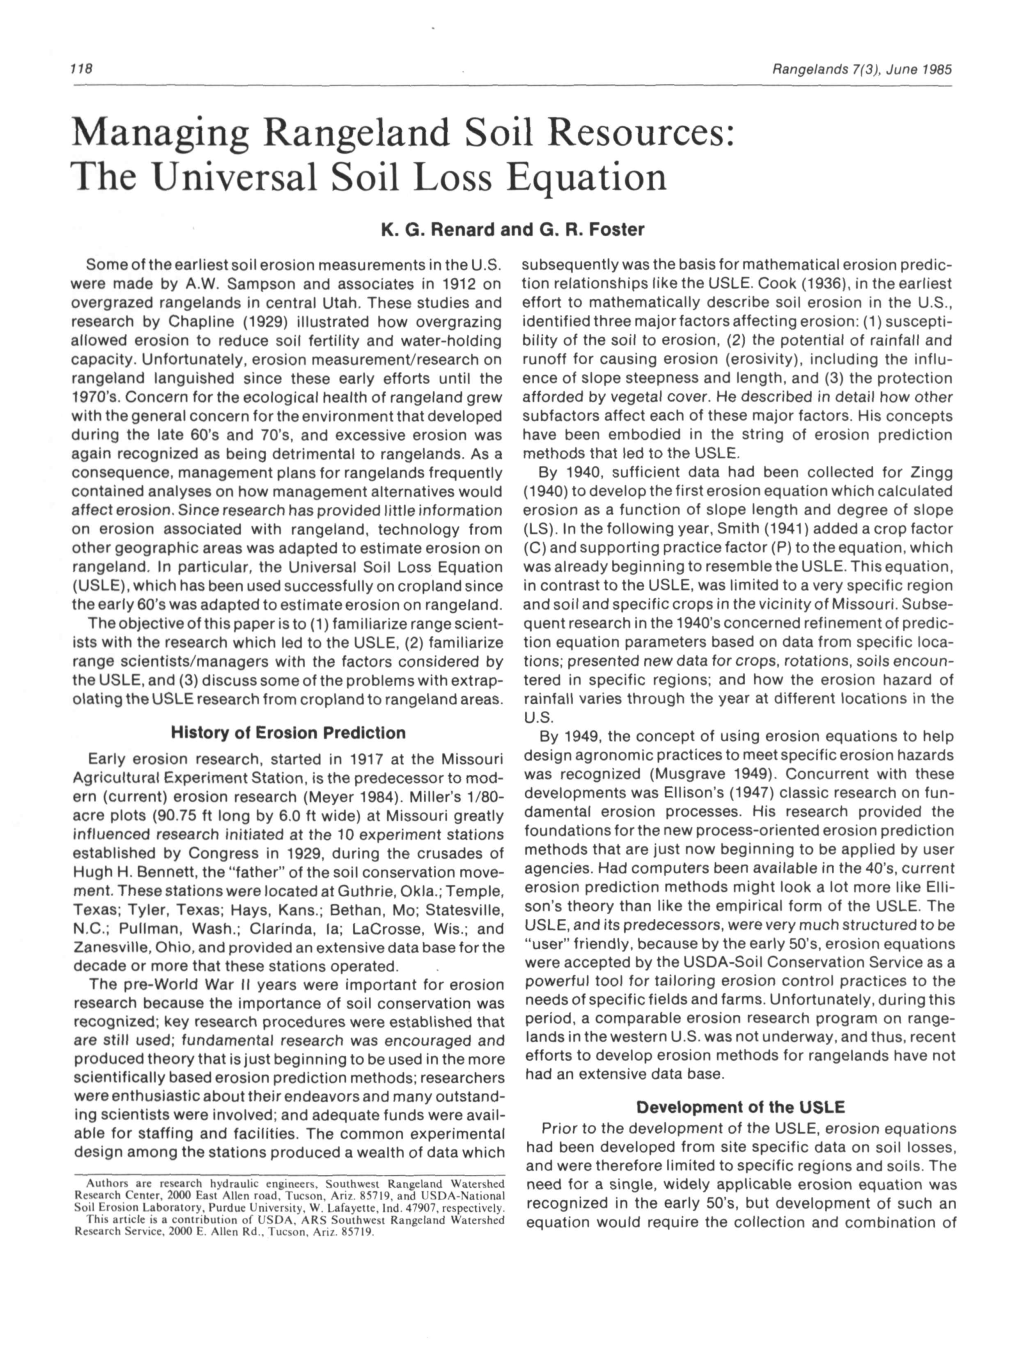 Managing Rangeland Soil Resources: the Universal Soil Loss Equation K